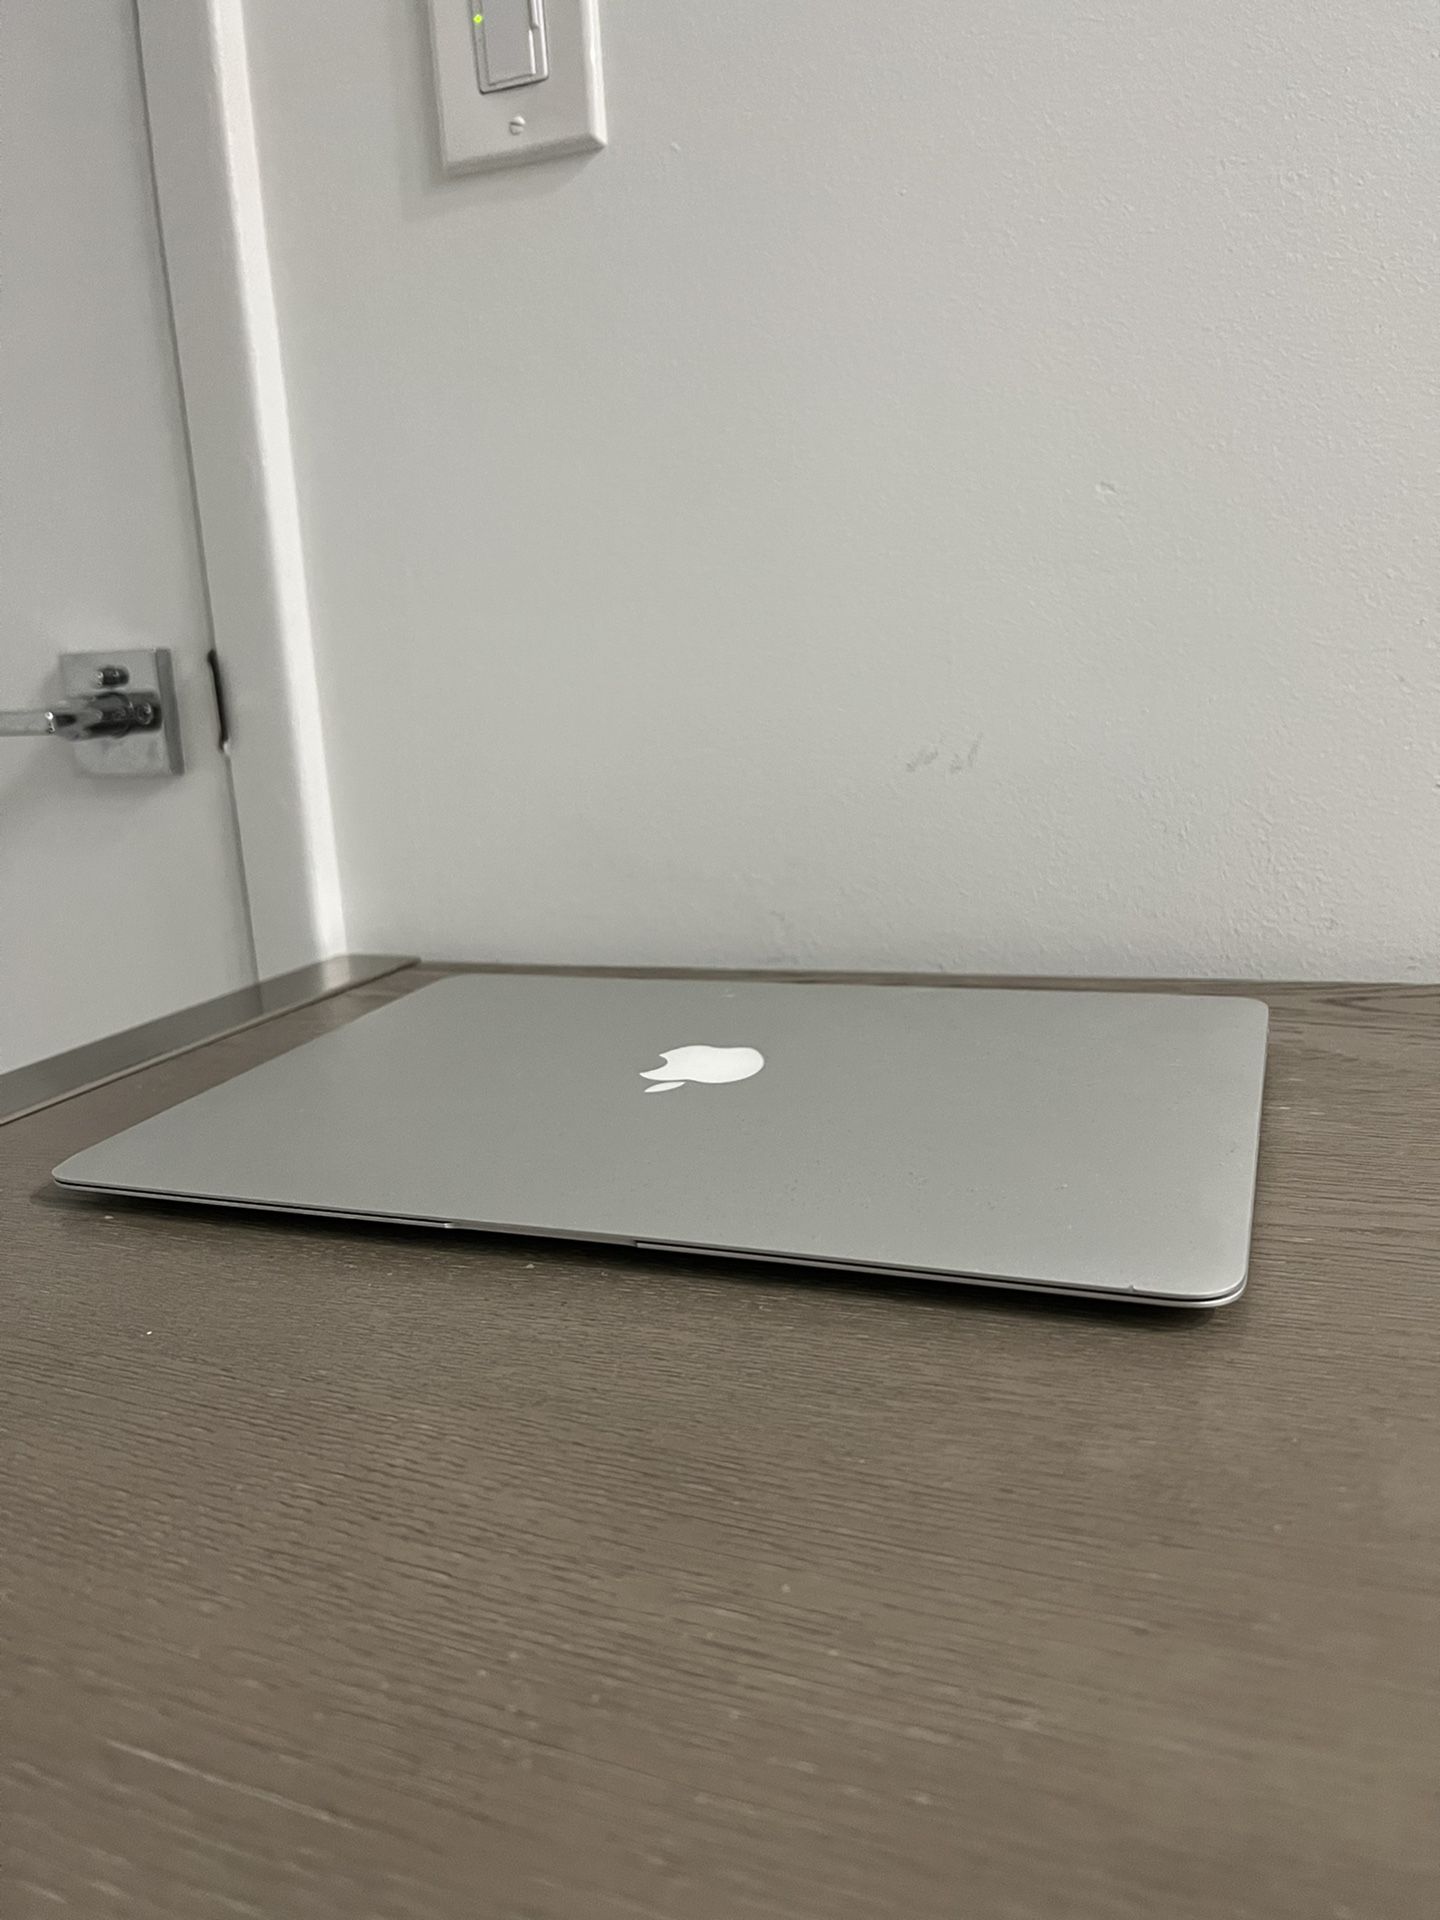 Apple MacBook Air 2015 13-inch Laptop